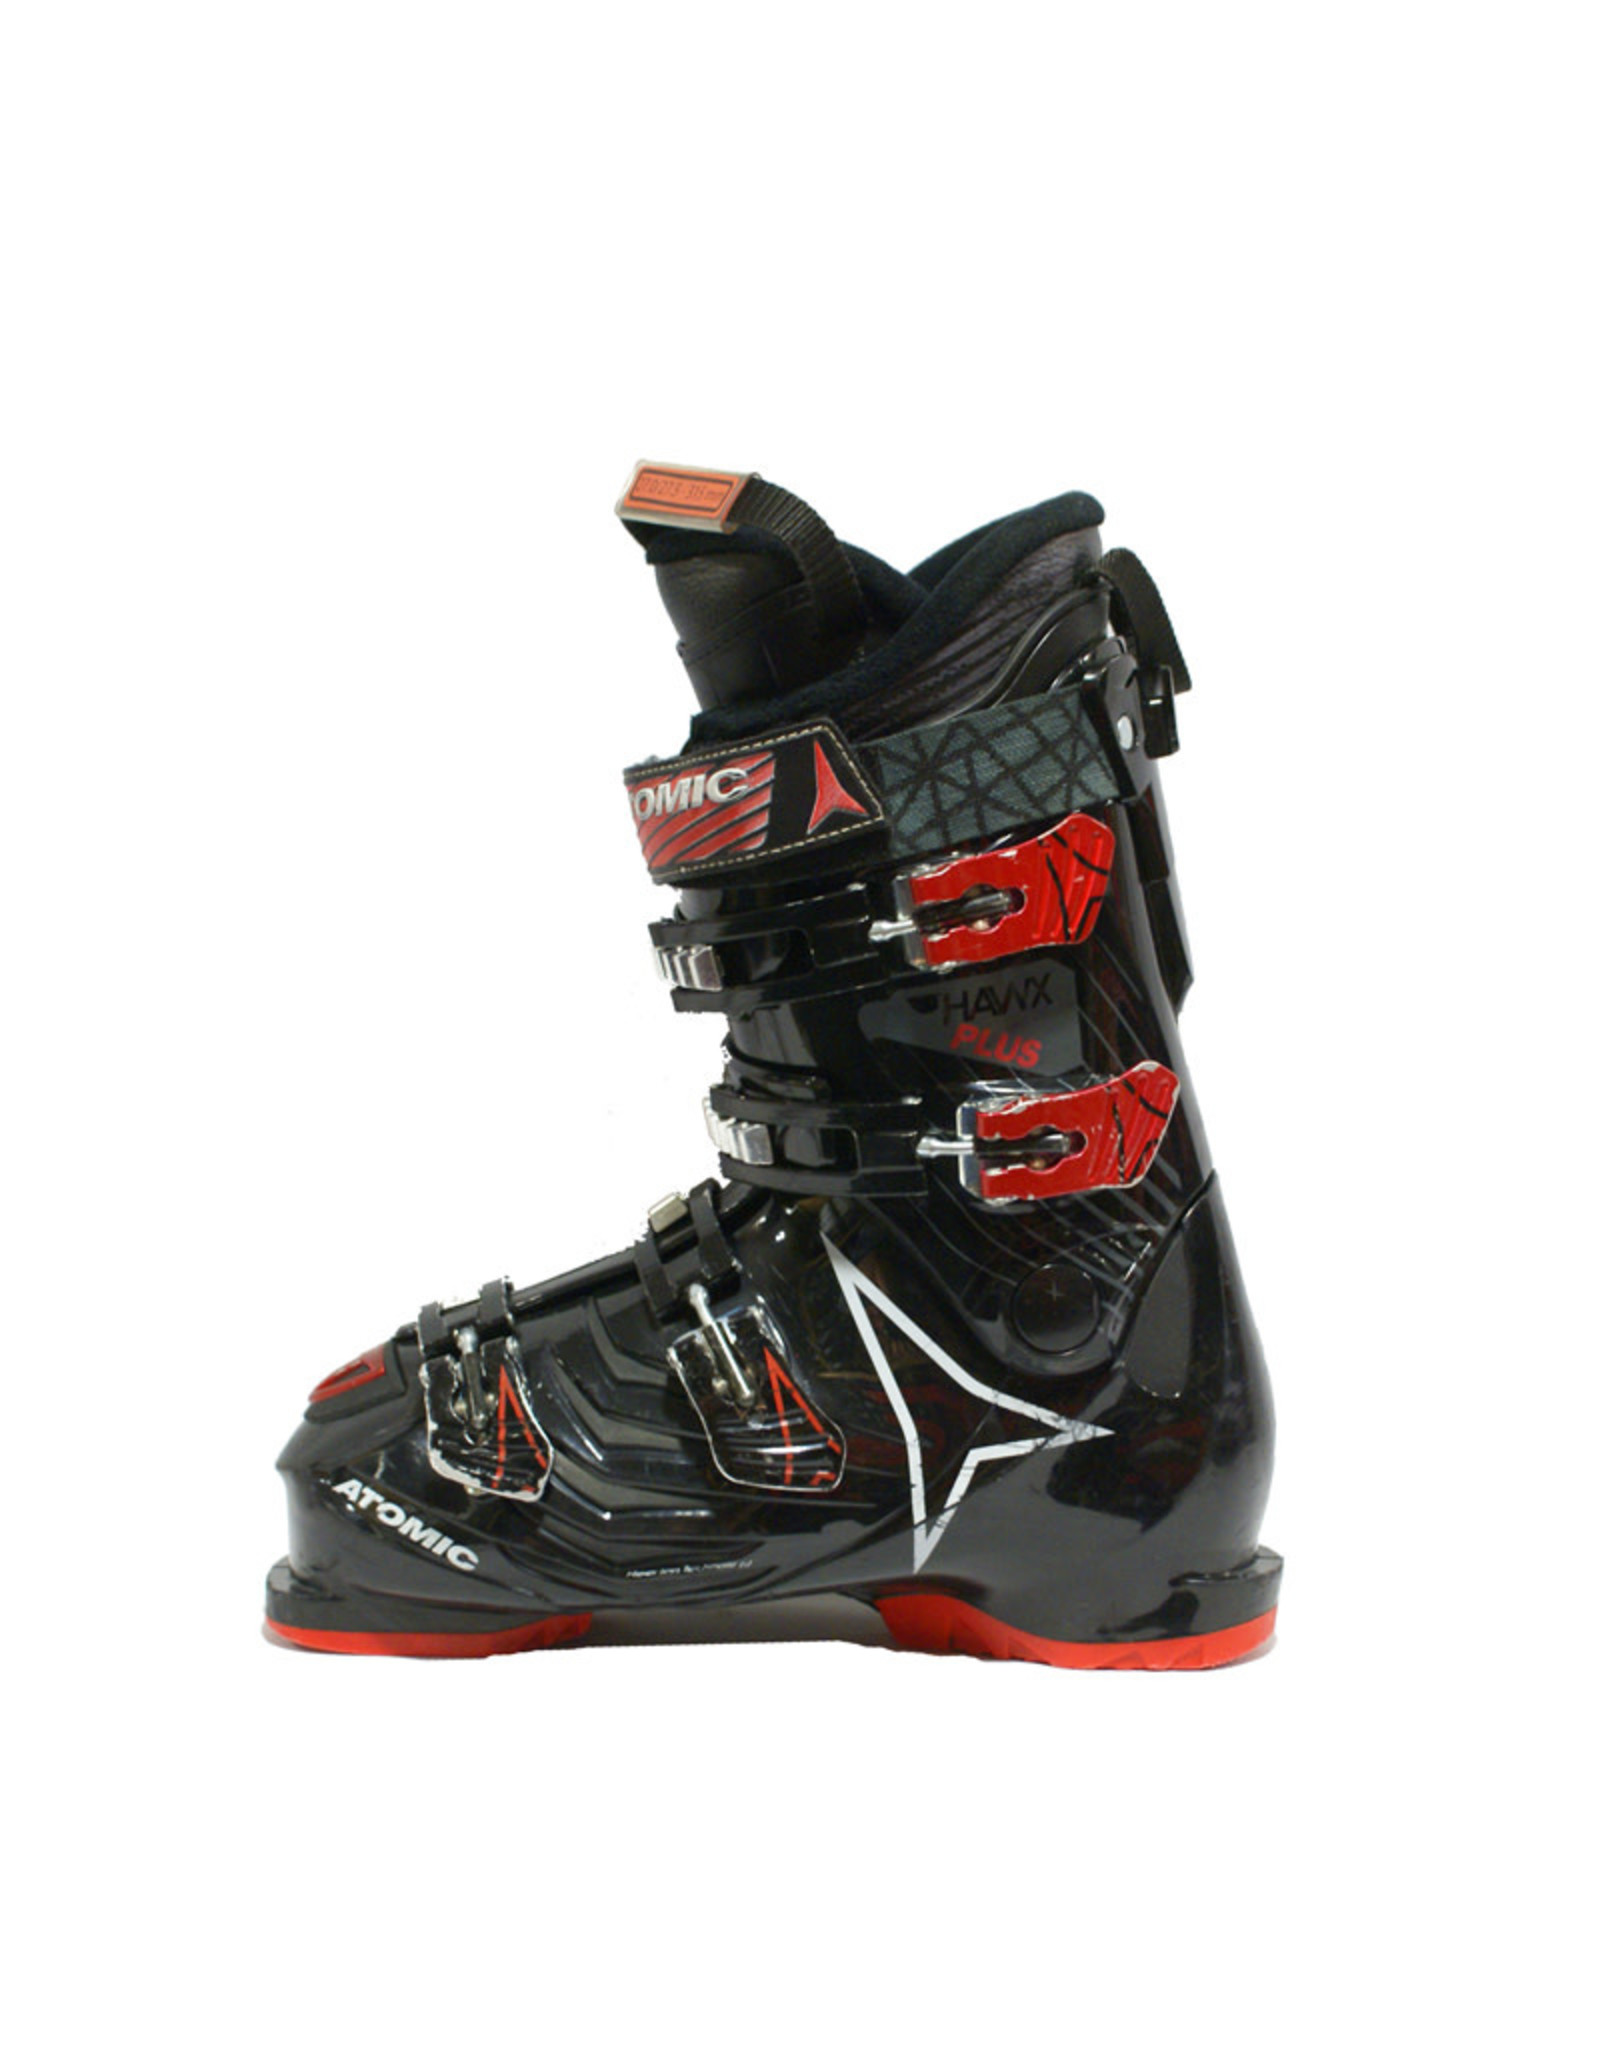 ATOMIC Skischoenen ATOMIC Hawx Plus zwart/rood (neus rood) Gebruikt